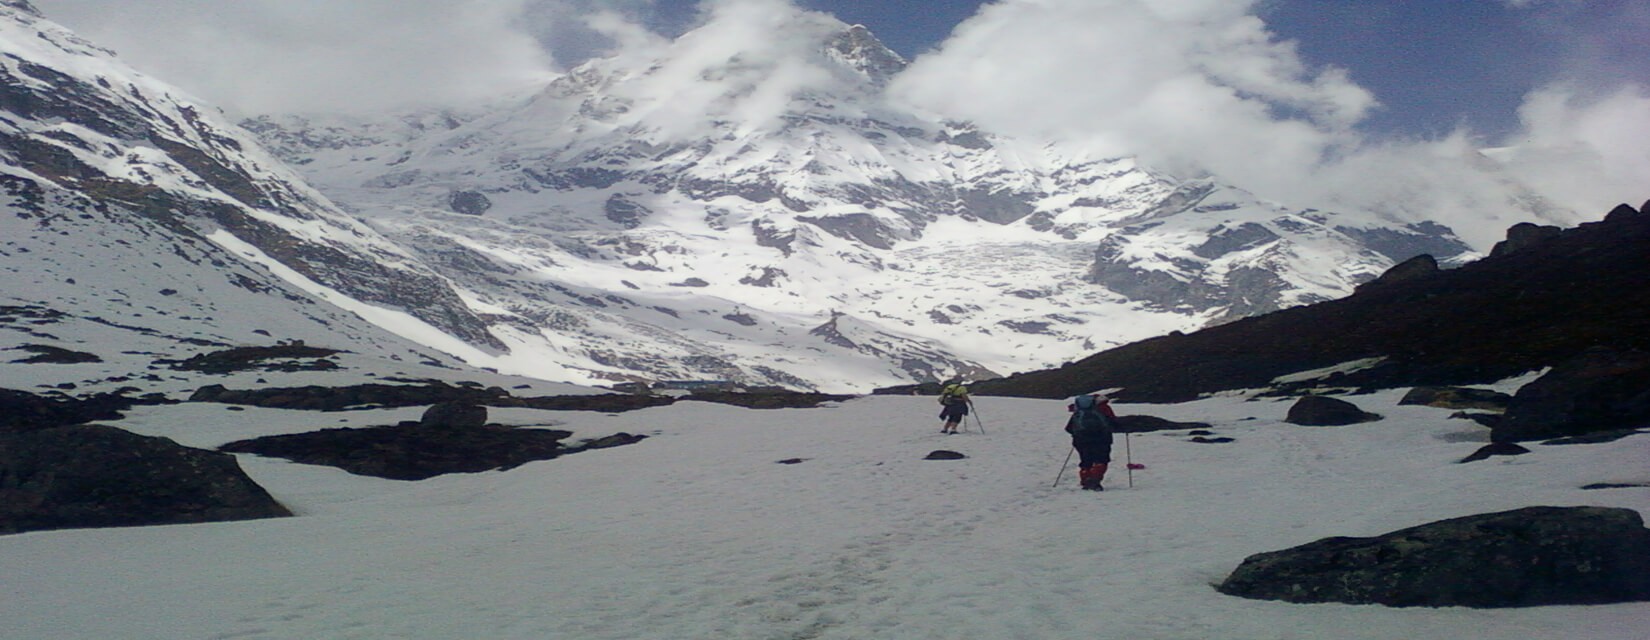 Annapurna Base Camp View